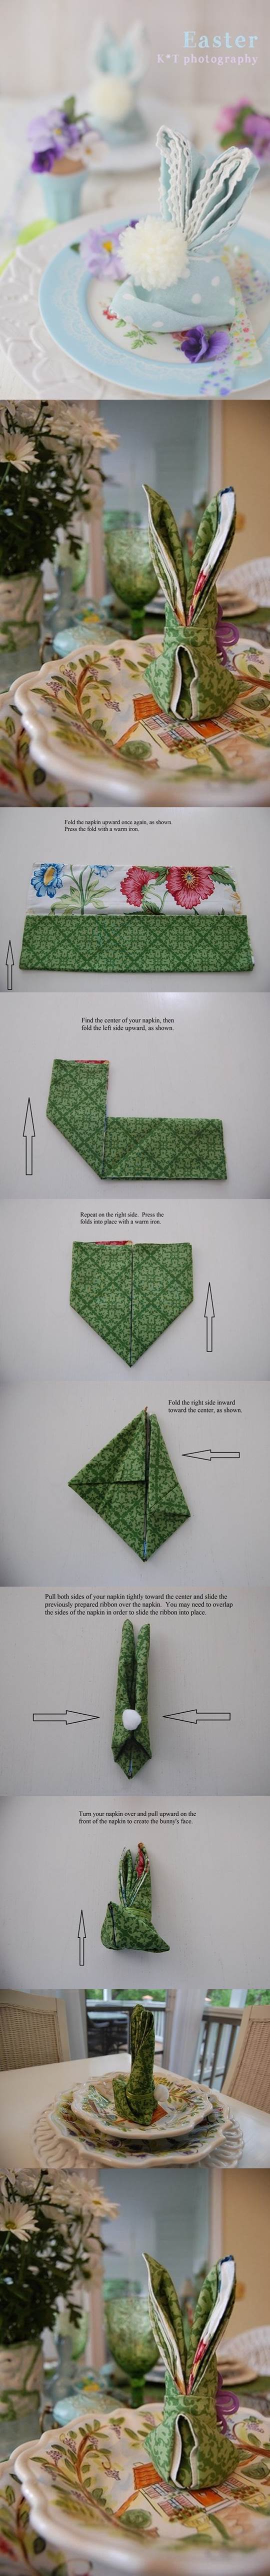 DIY Bunny Napkin Fold 2